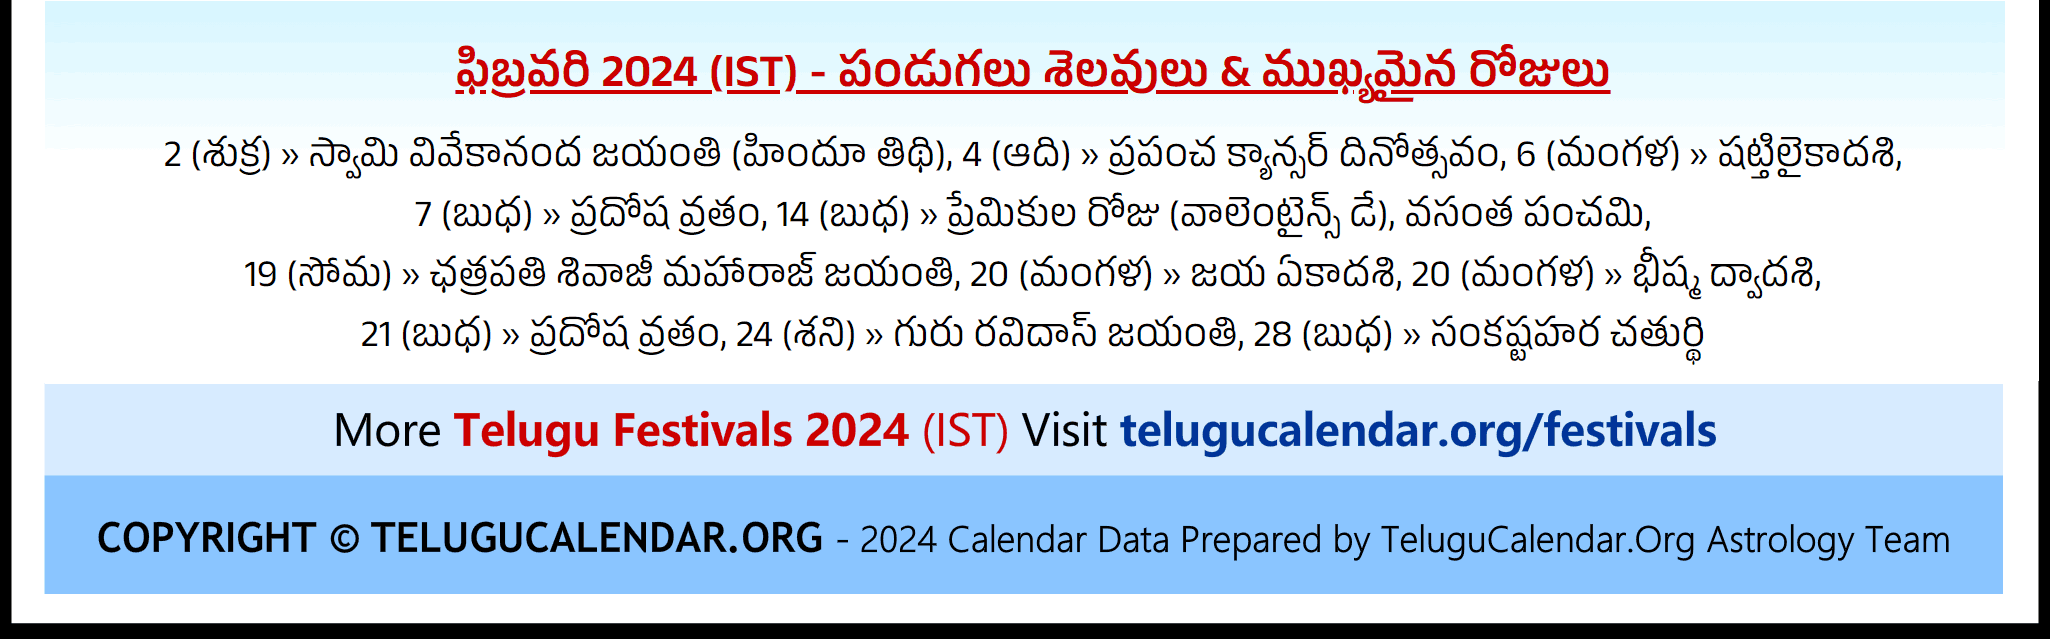 Telugu Festivals (IST) 2024 February